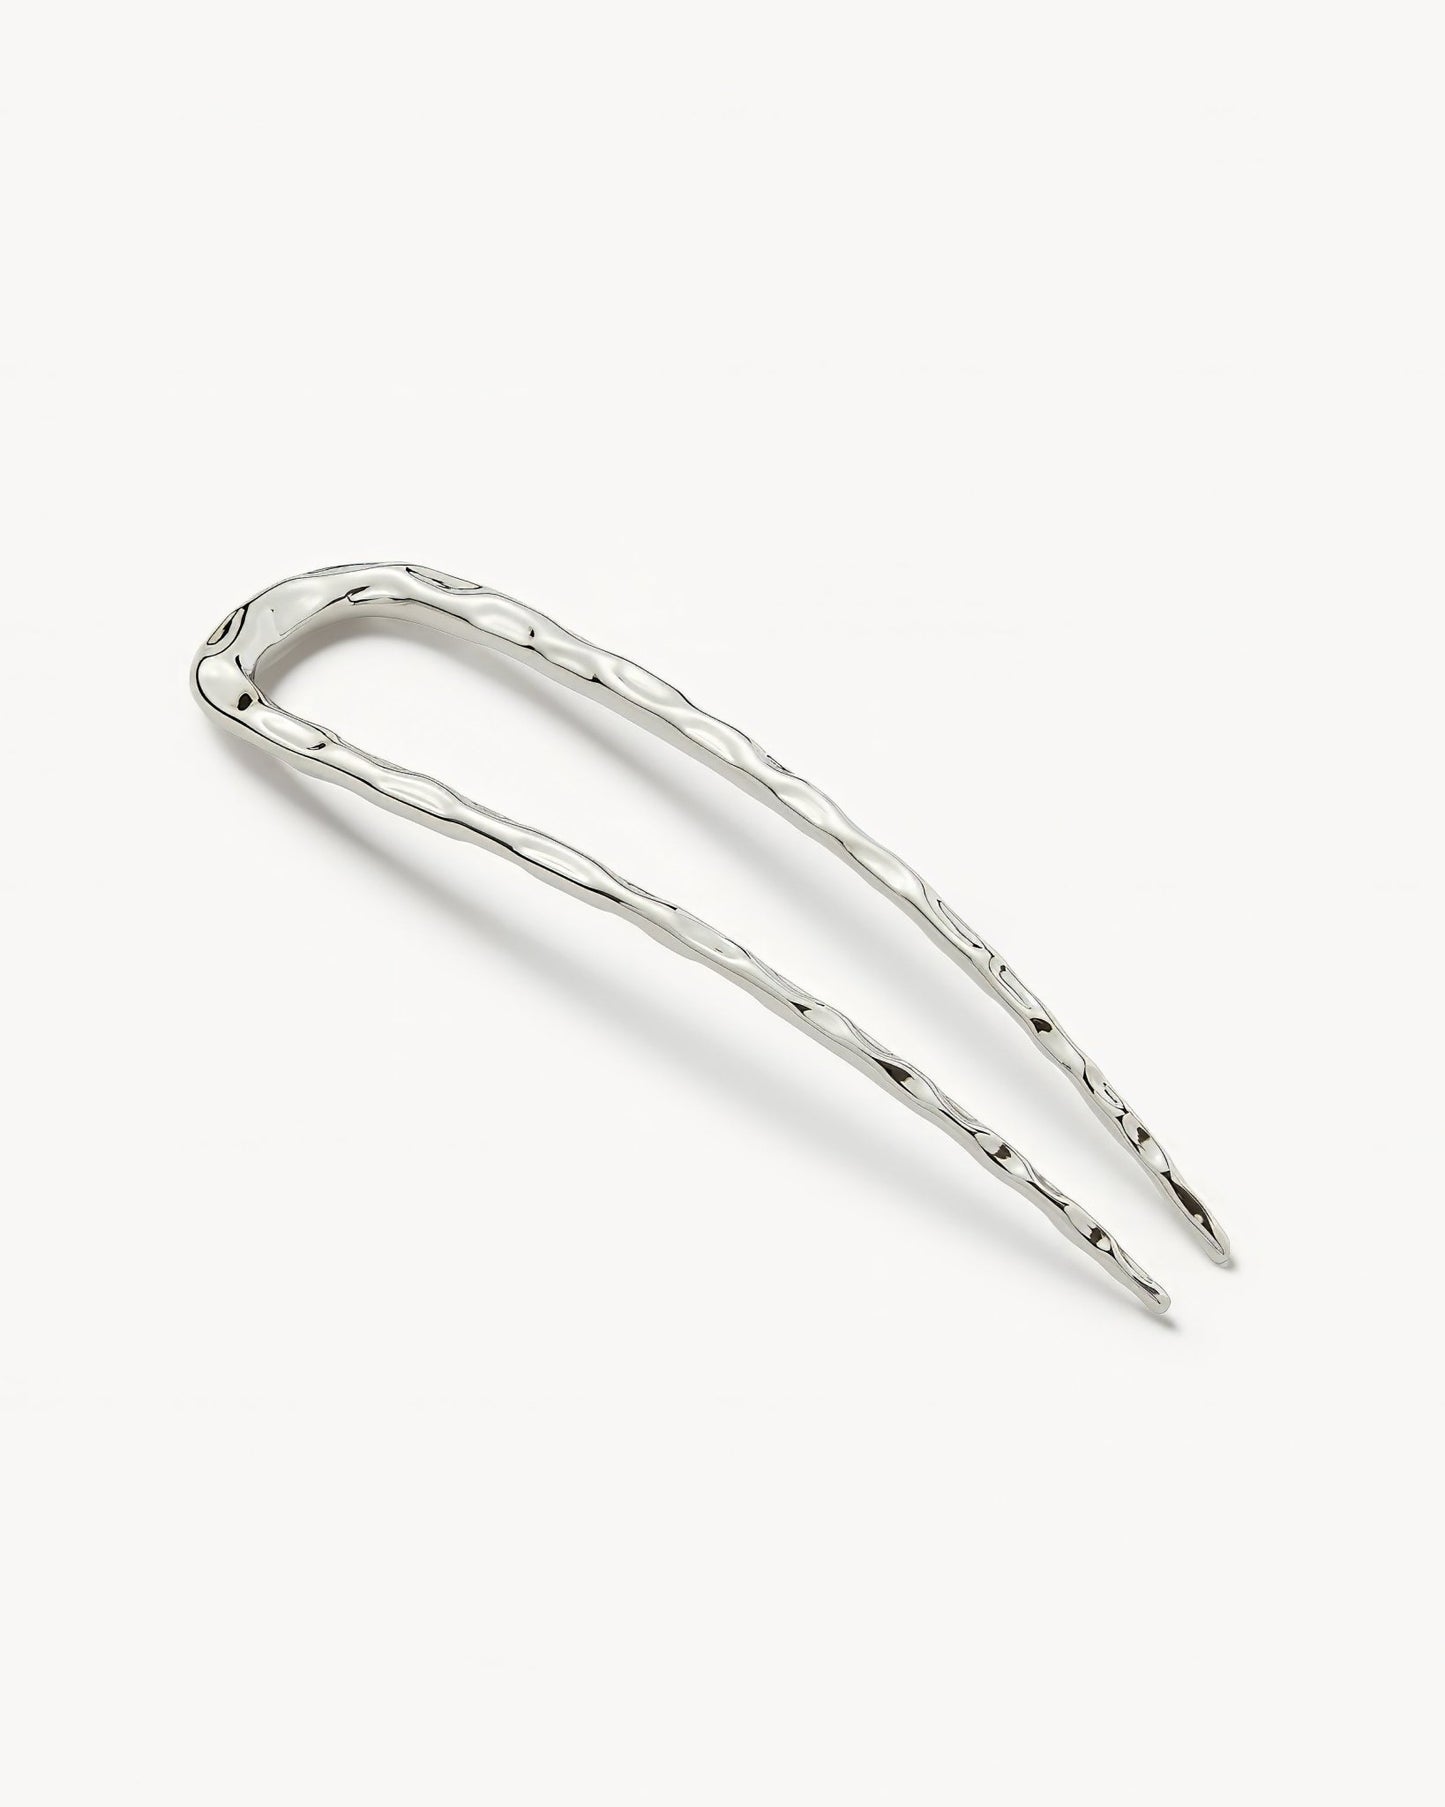 Midi Wavy French Hair Pin in Silver